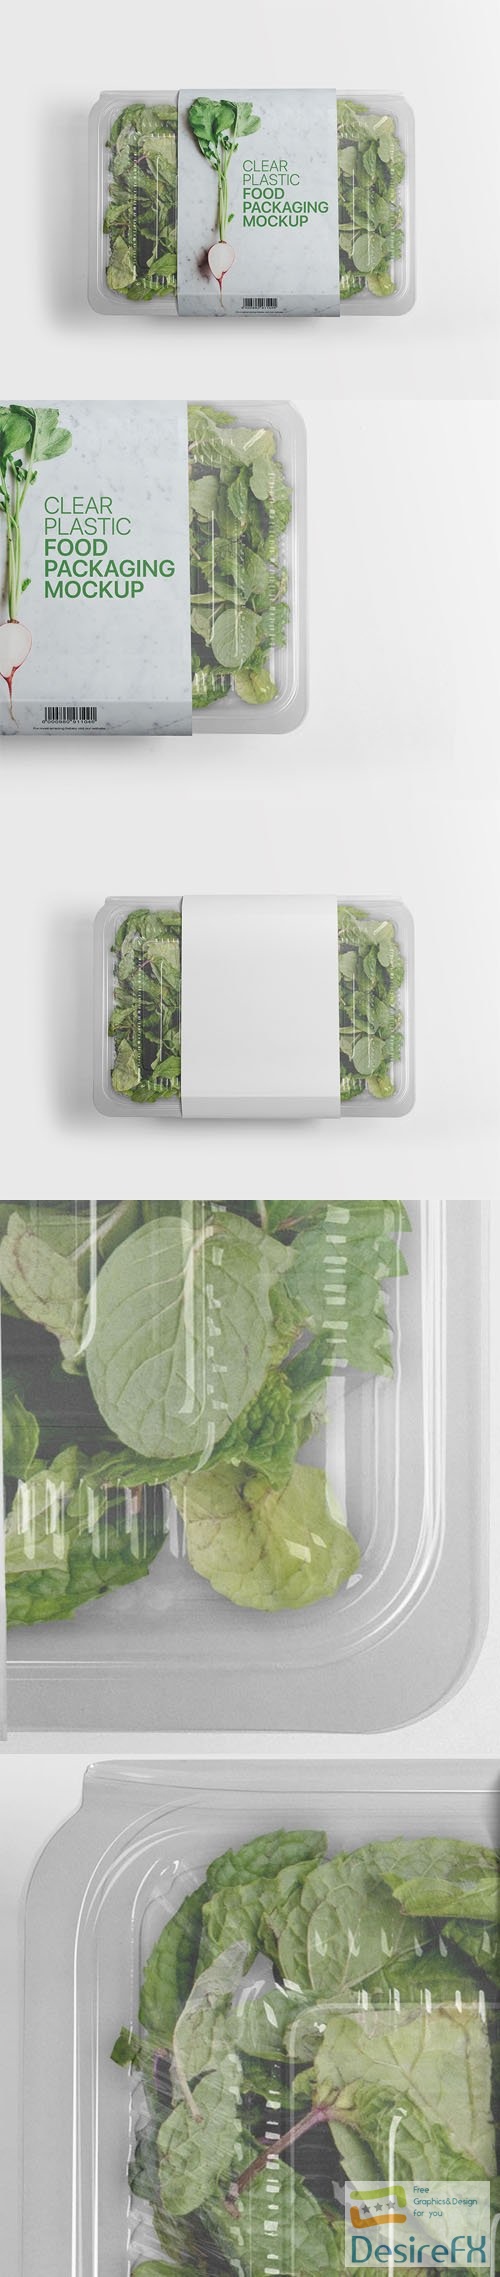 Plastic Food Packaging PSD Mockup Template